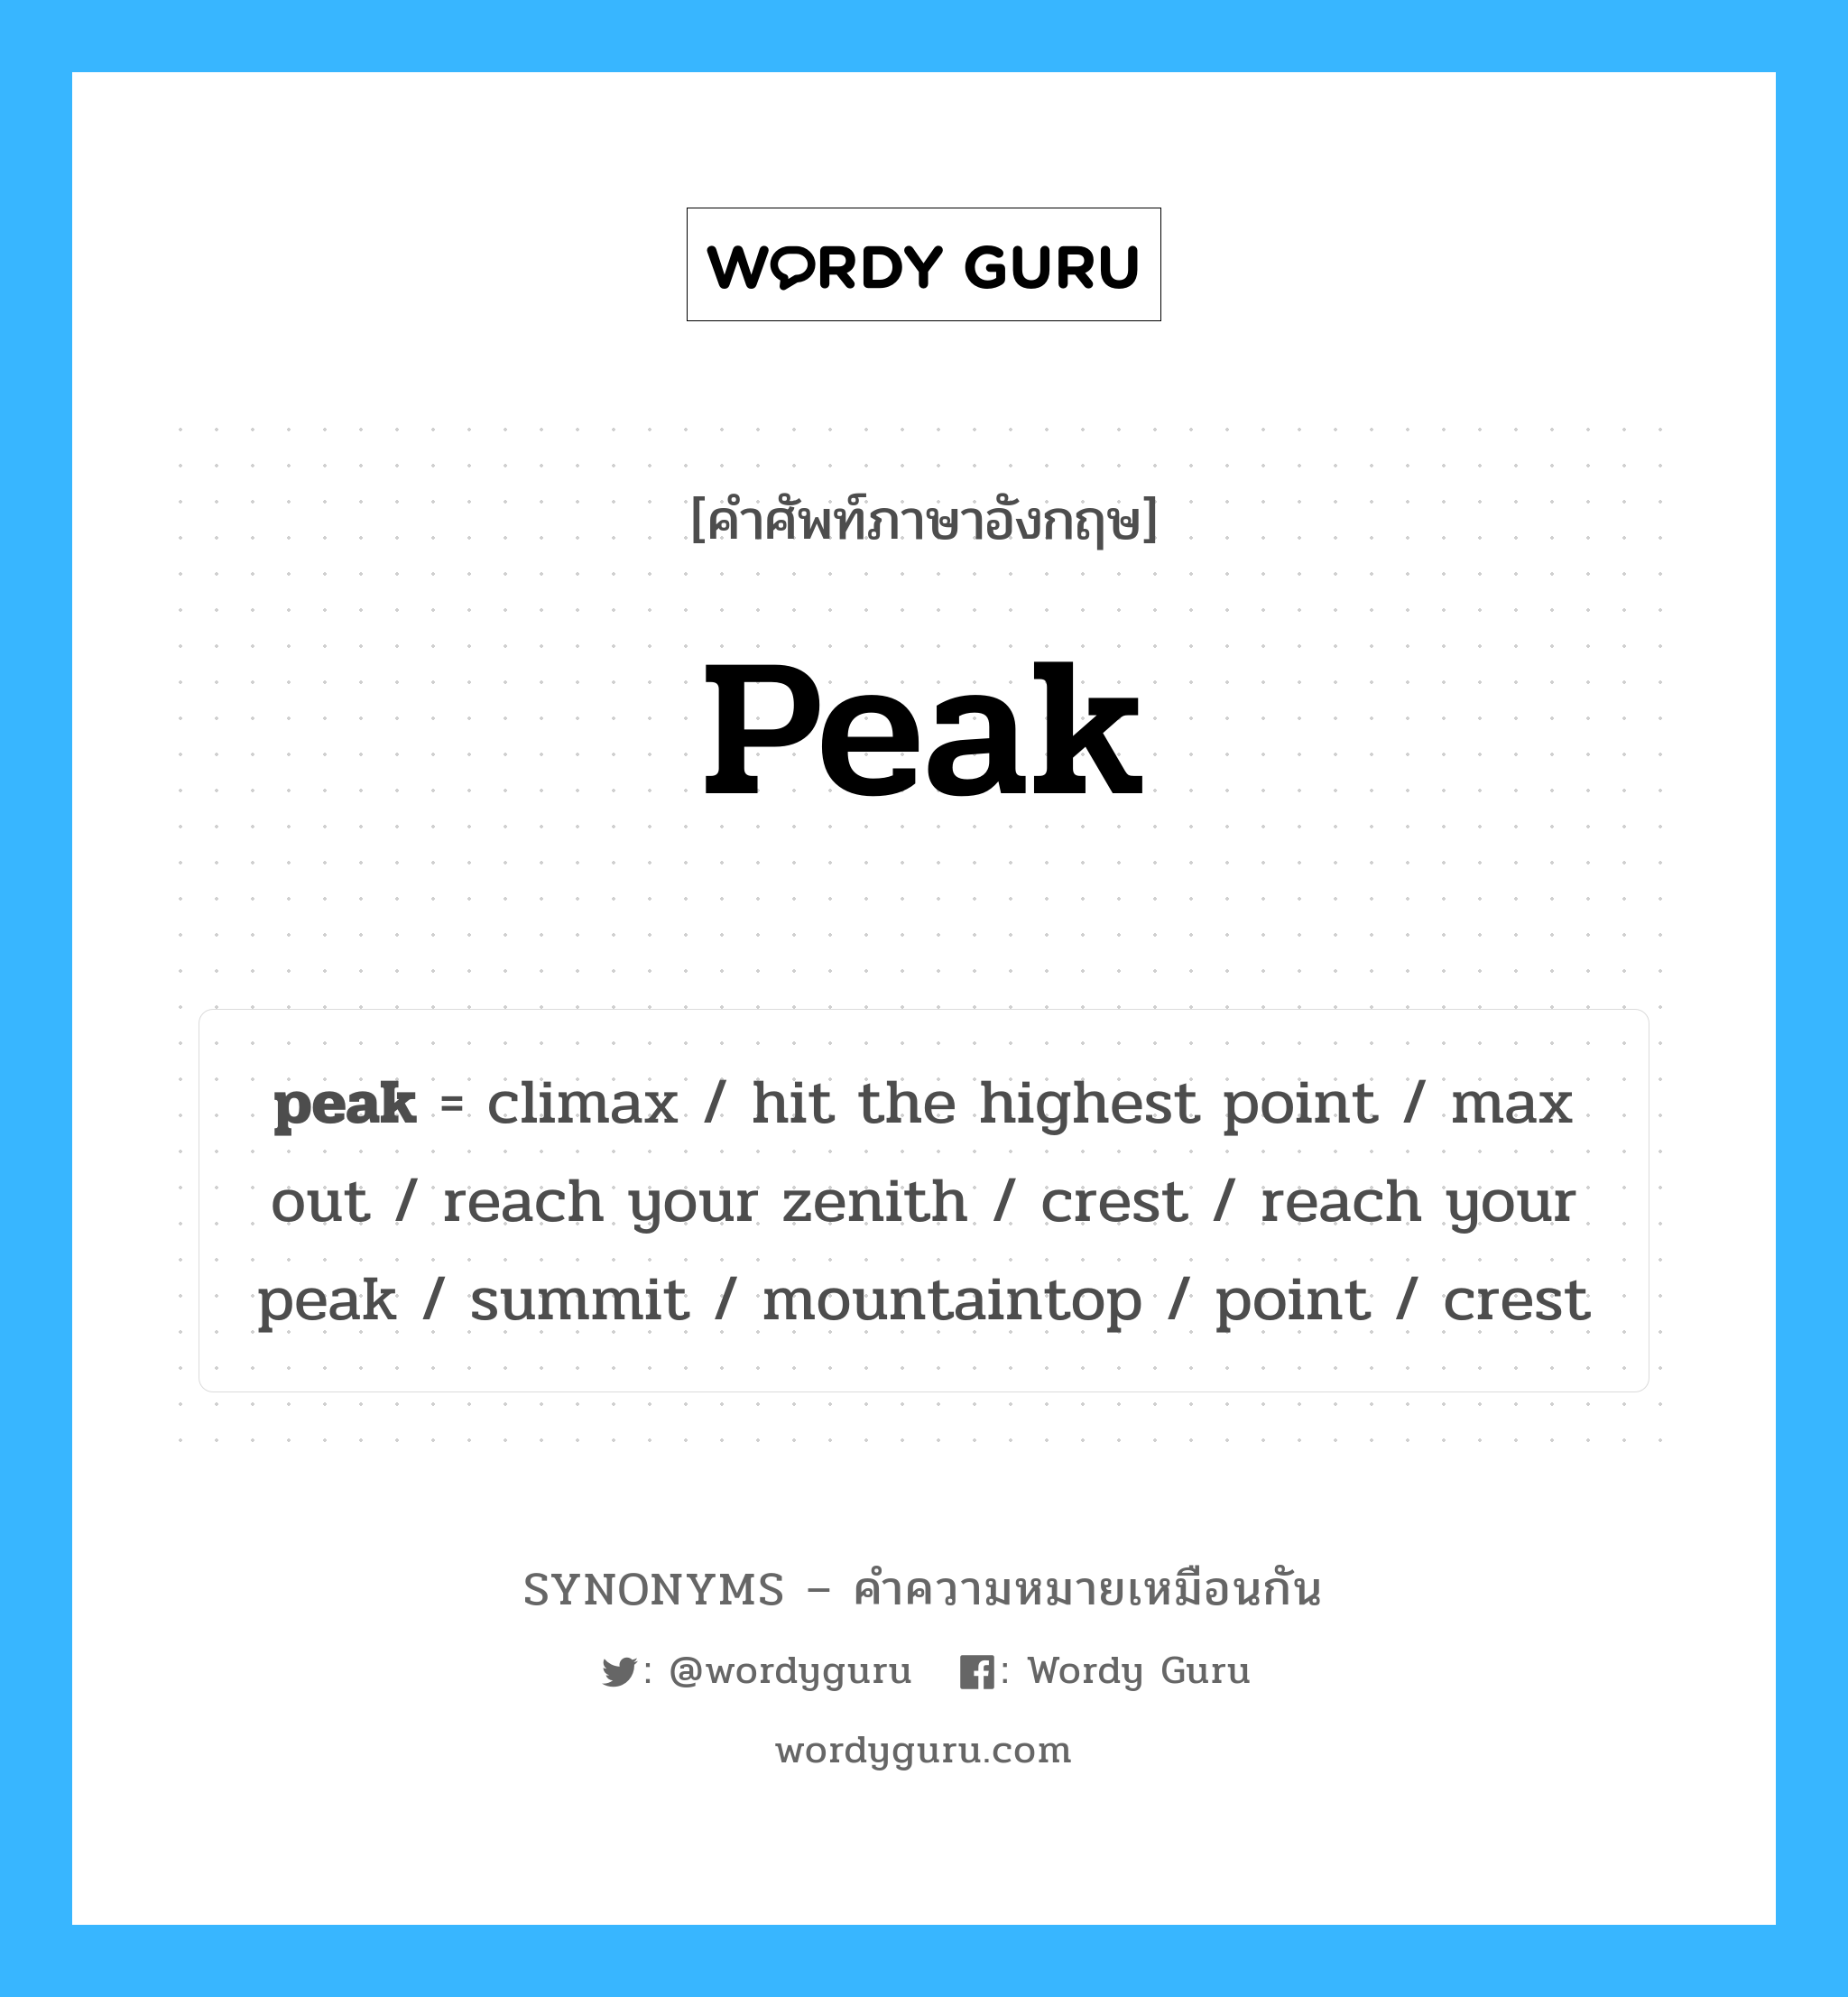 crest เป็นหนึ่งใน peak และมีคำอื่น ๆ อีกดังนี้, คำศัพท์ภาษาอังกฤษ crest ความหมายคล้ายกันกับ peak แปลว่า เครสท์ หมวด peak